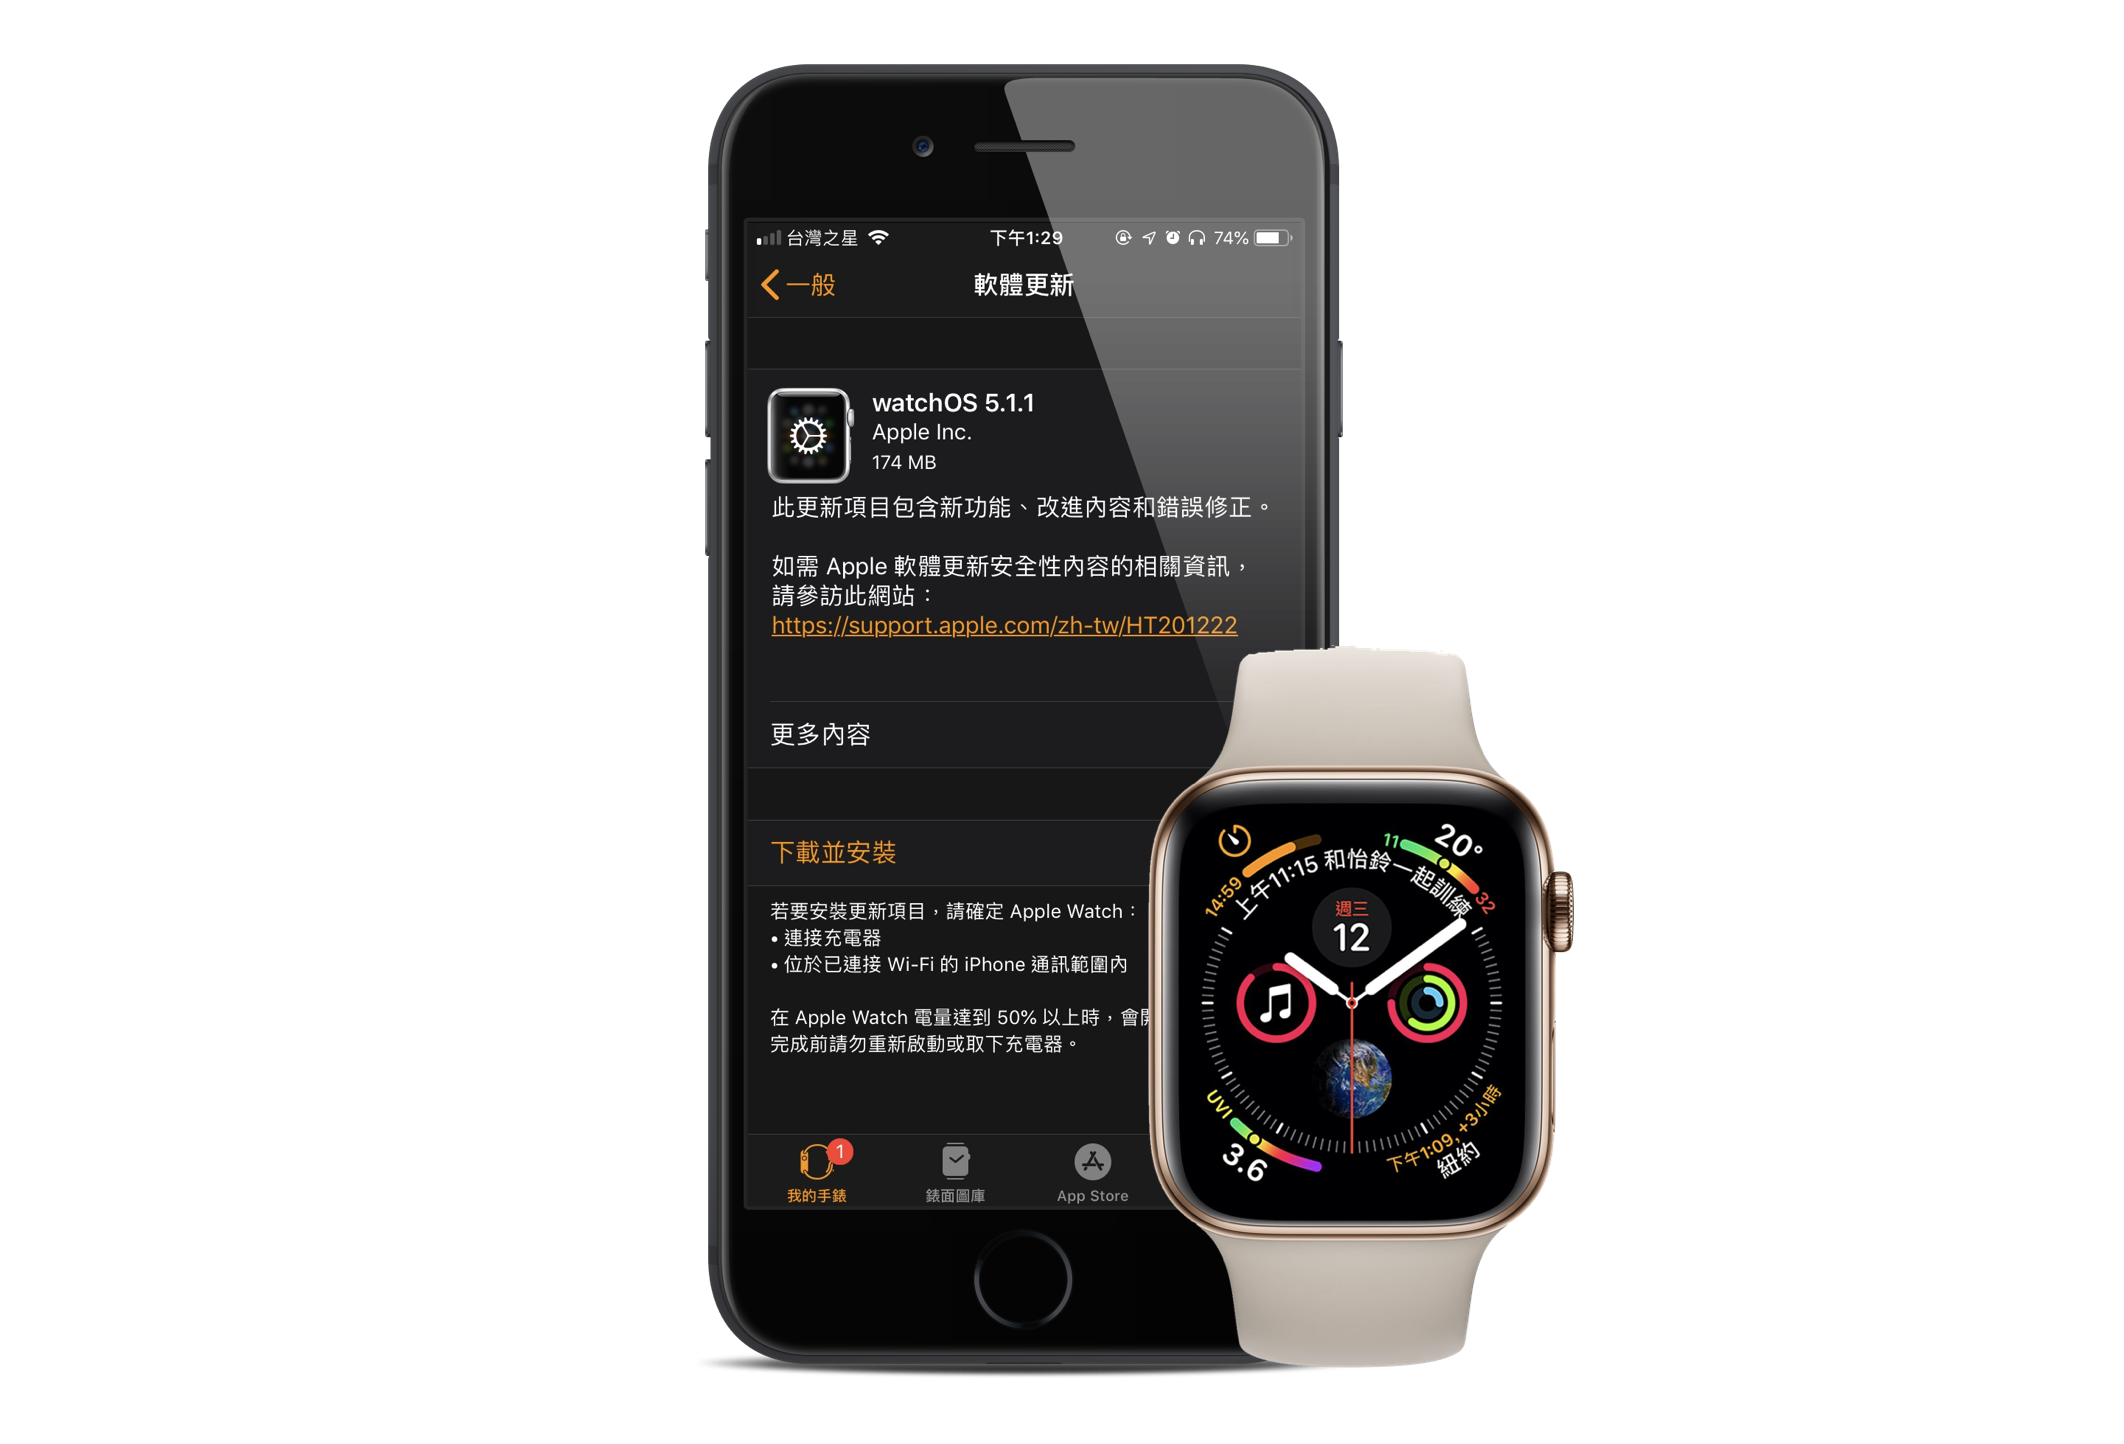 Apple Watch、watchOS 5.1.1